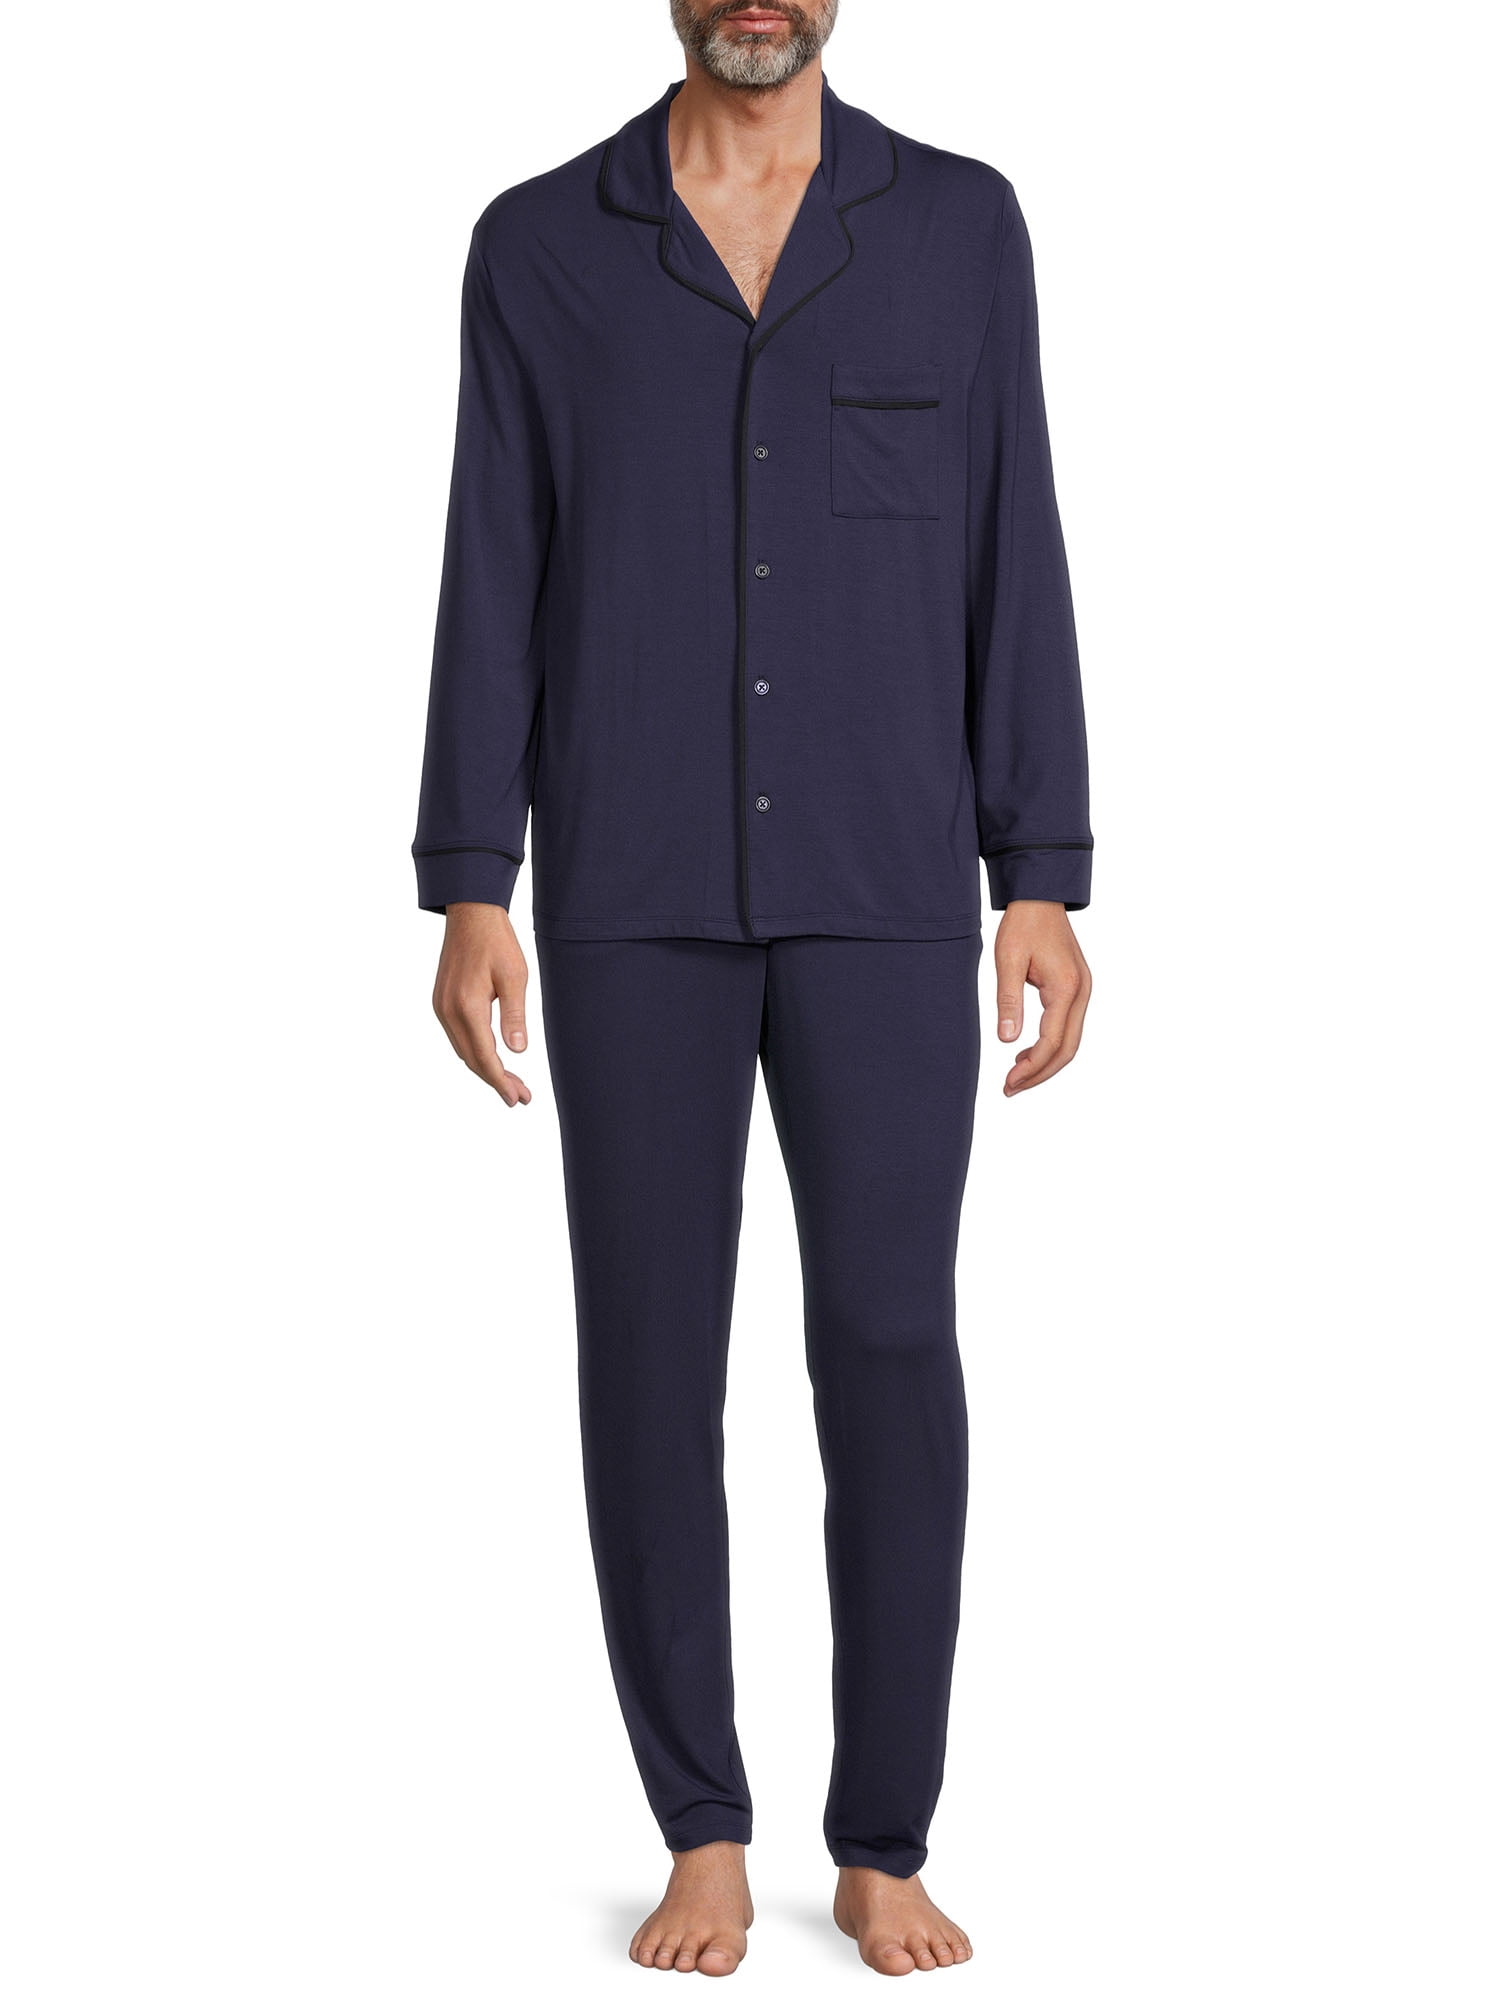 Sealy Men’s Long Sleeve Top and Pants Sleepwear Set, 2-Piece - Walmart.com